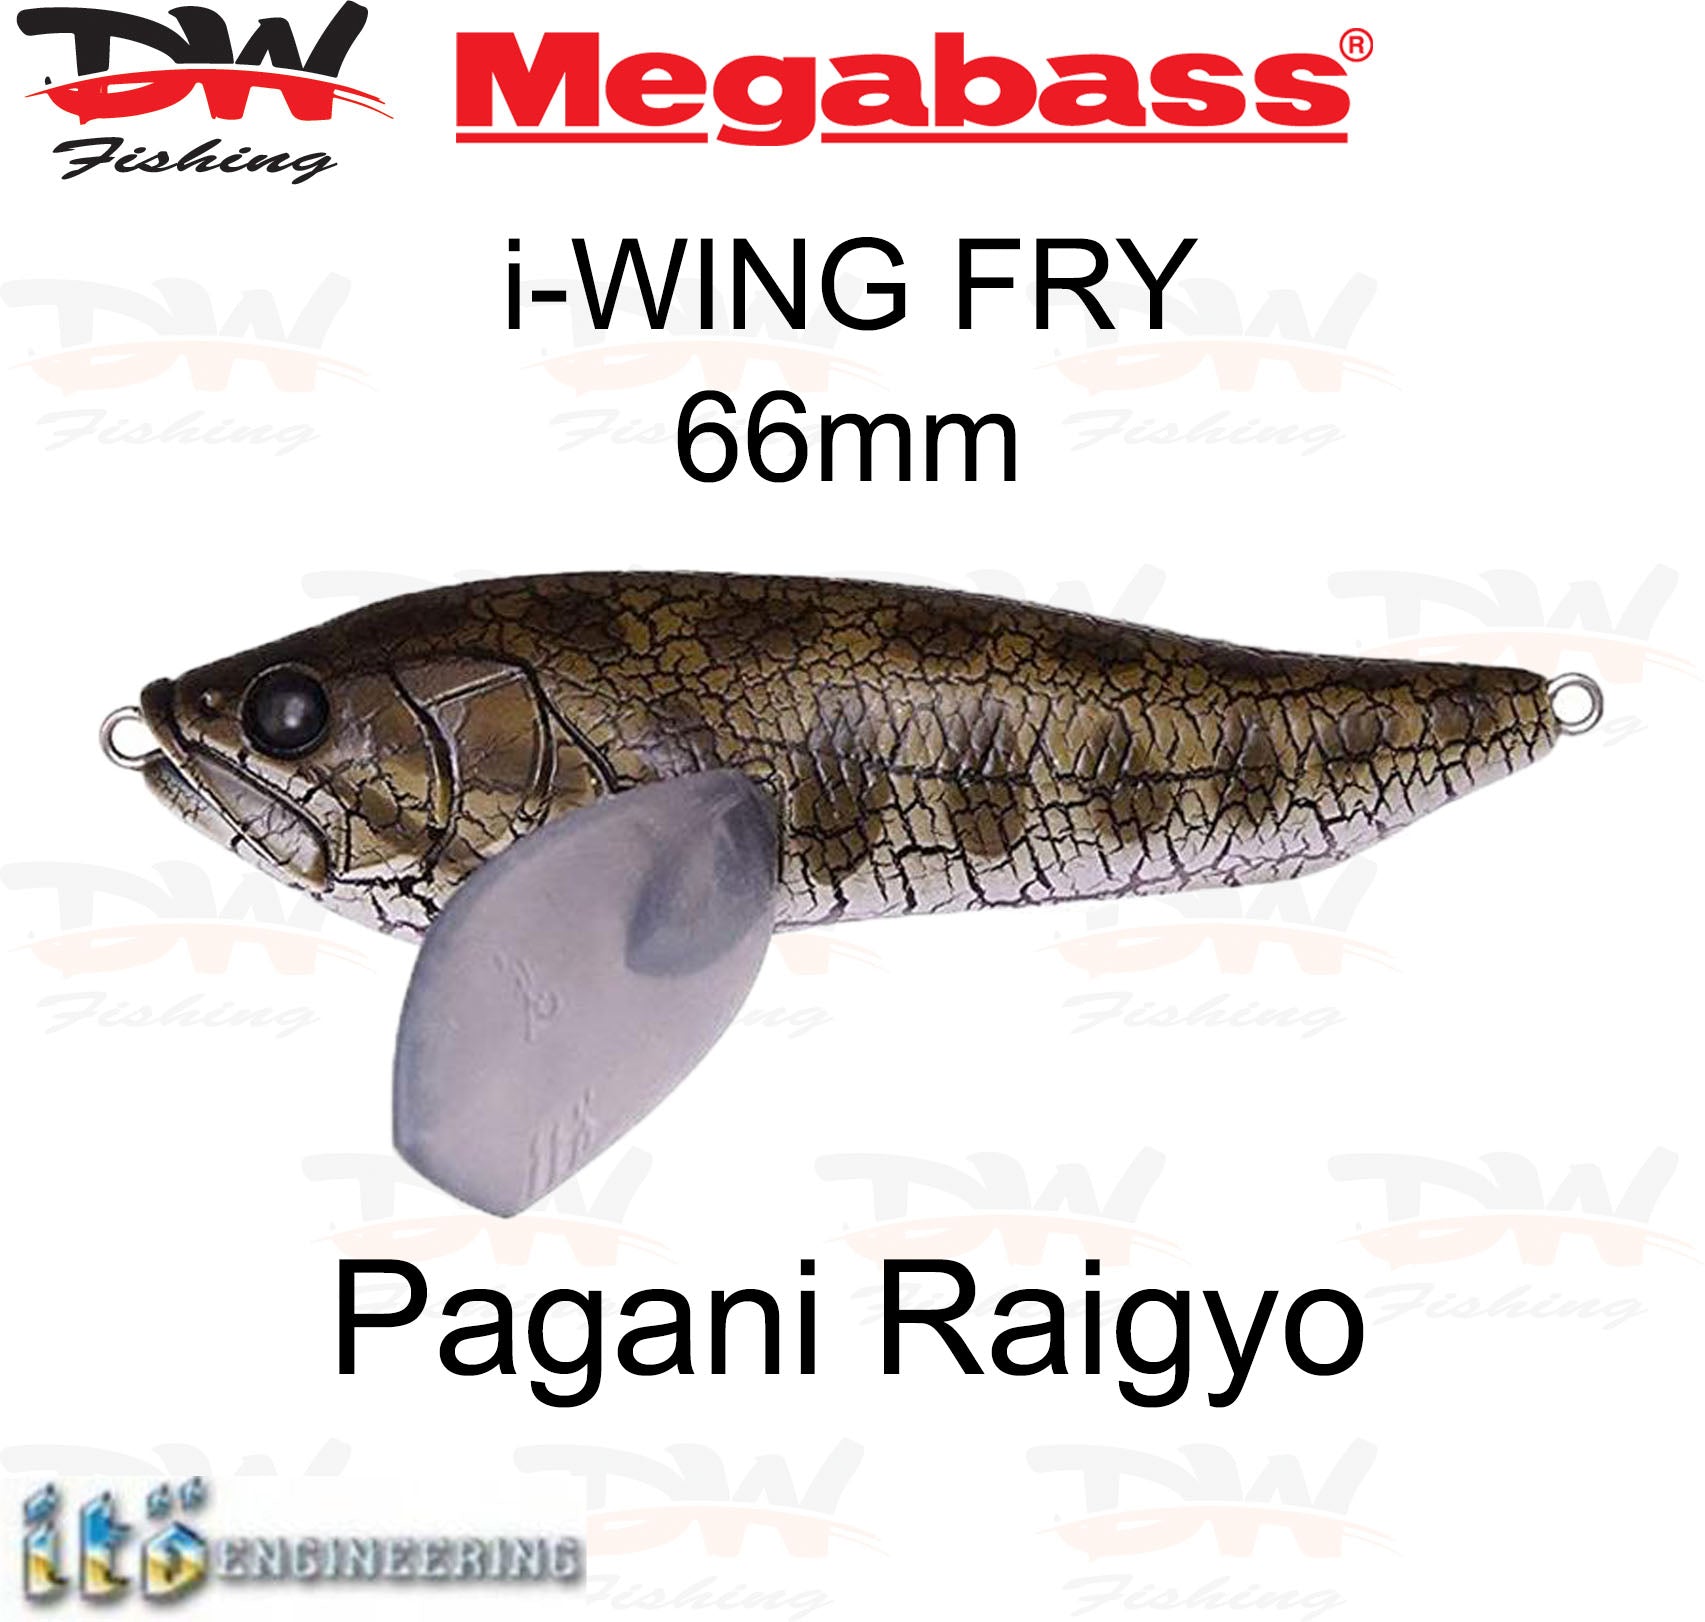 Megabass i-WING FRY surface lure single colour Pagani Raigyo